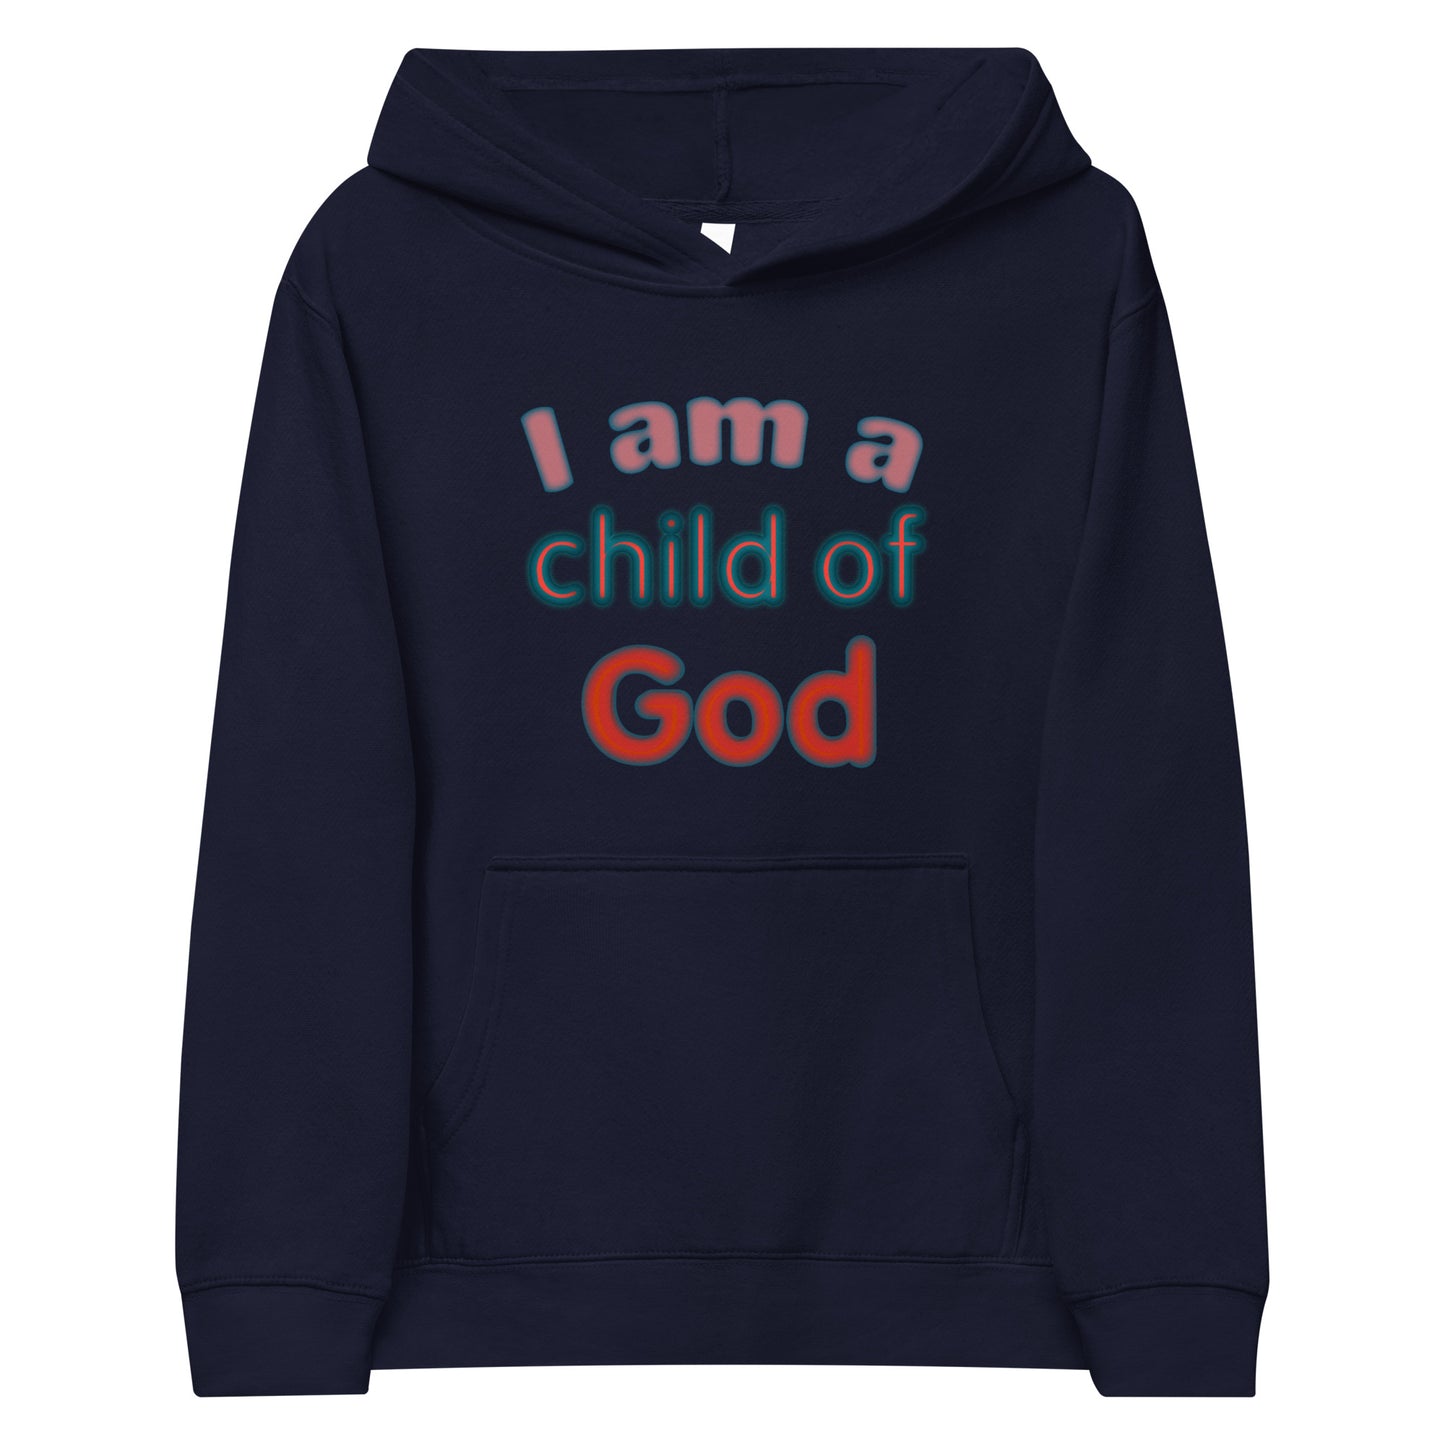 I Am a Child of God Kids Hoodie